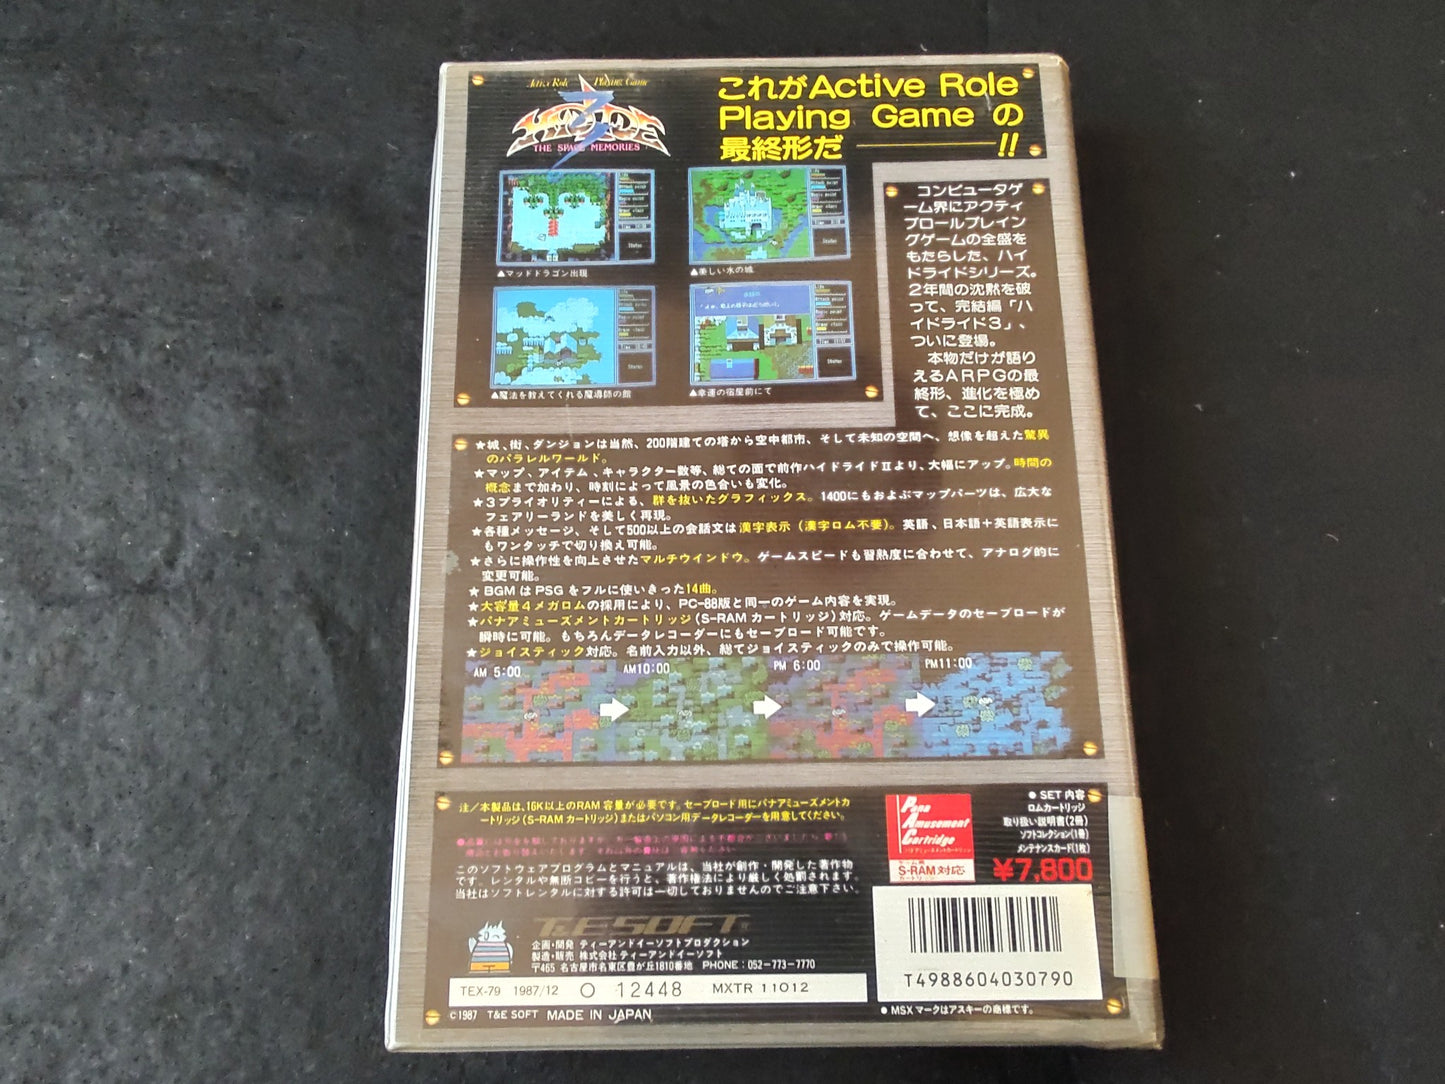 Hydride 3 The Space Memories MSX/MSX Game Cartridge, Manual, Boxed set -e0709-